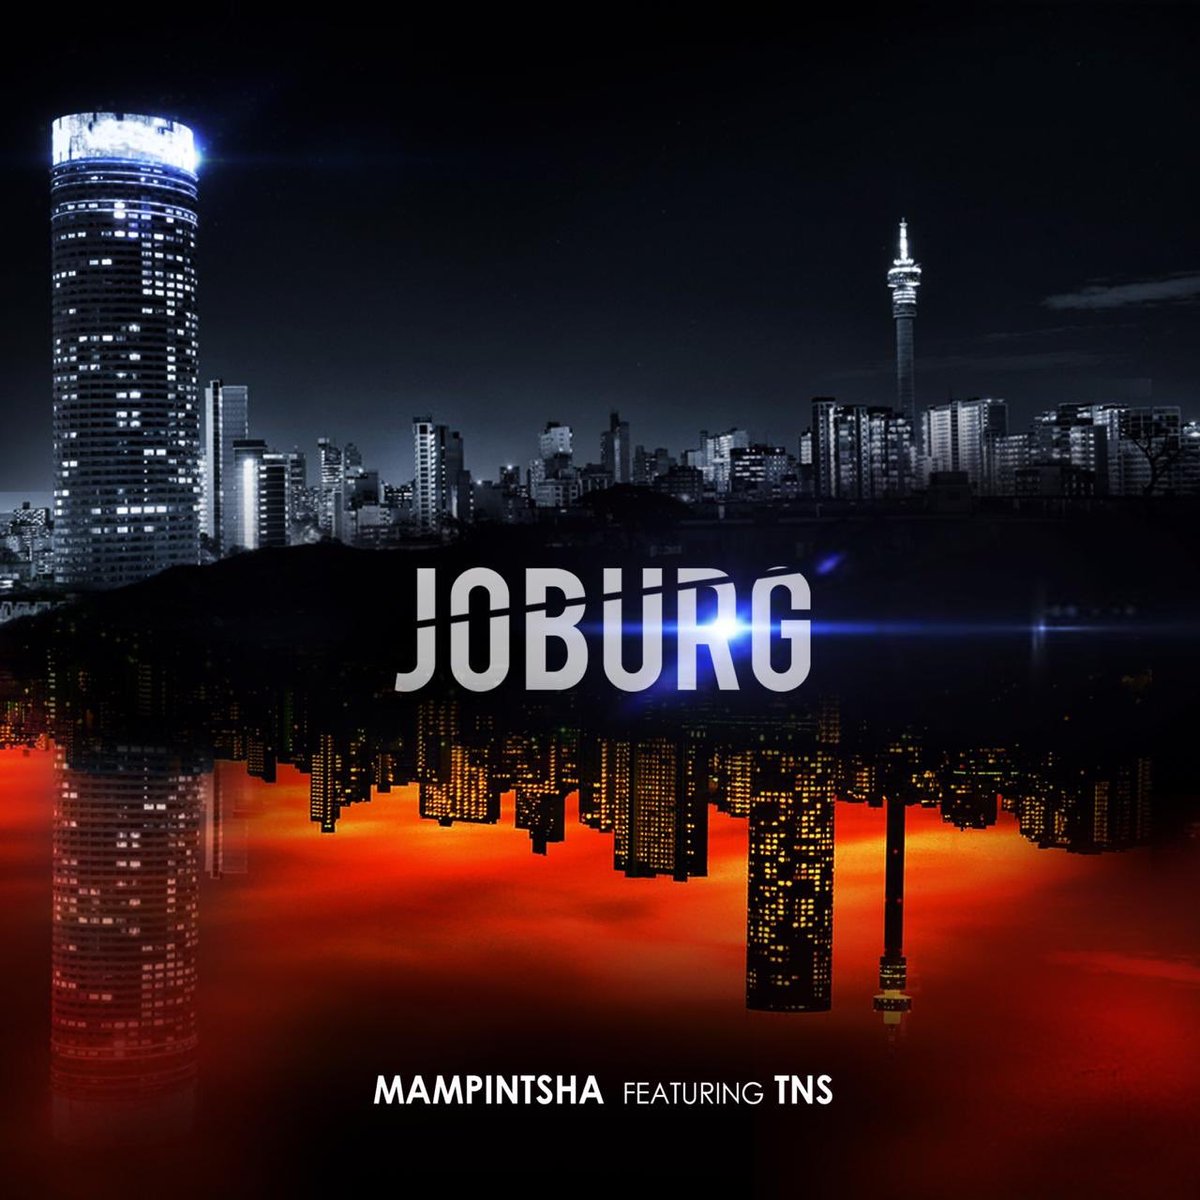 Mampintsha - Joburg Feat. TNS 9